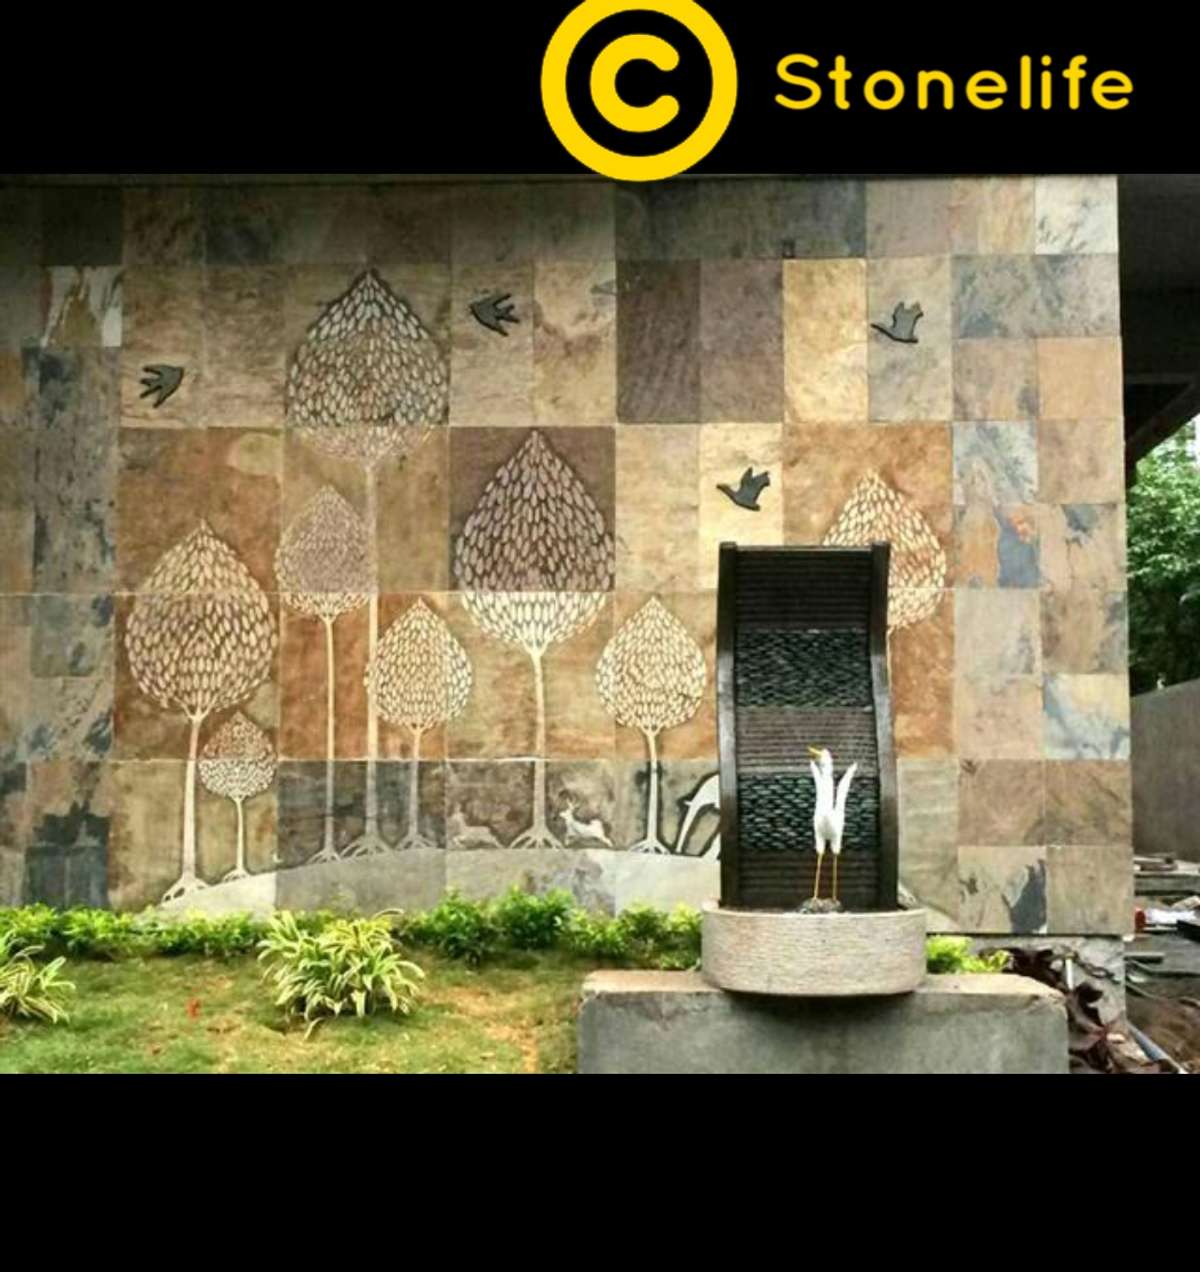 #slate stone carving#beautiful walls#stonelife#